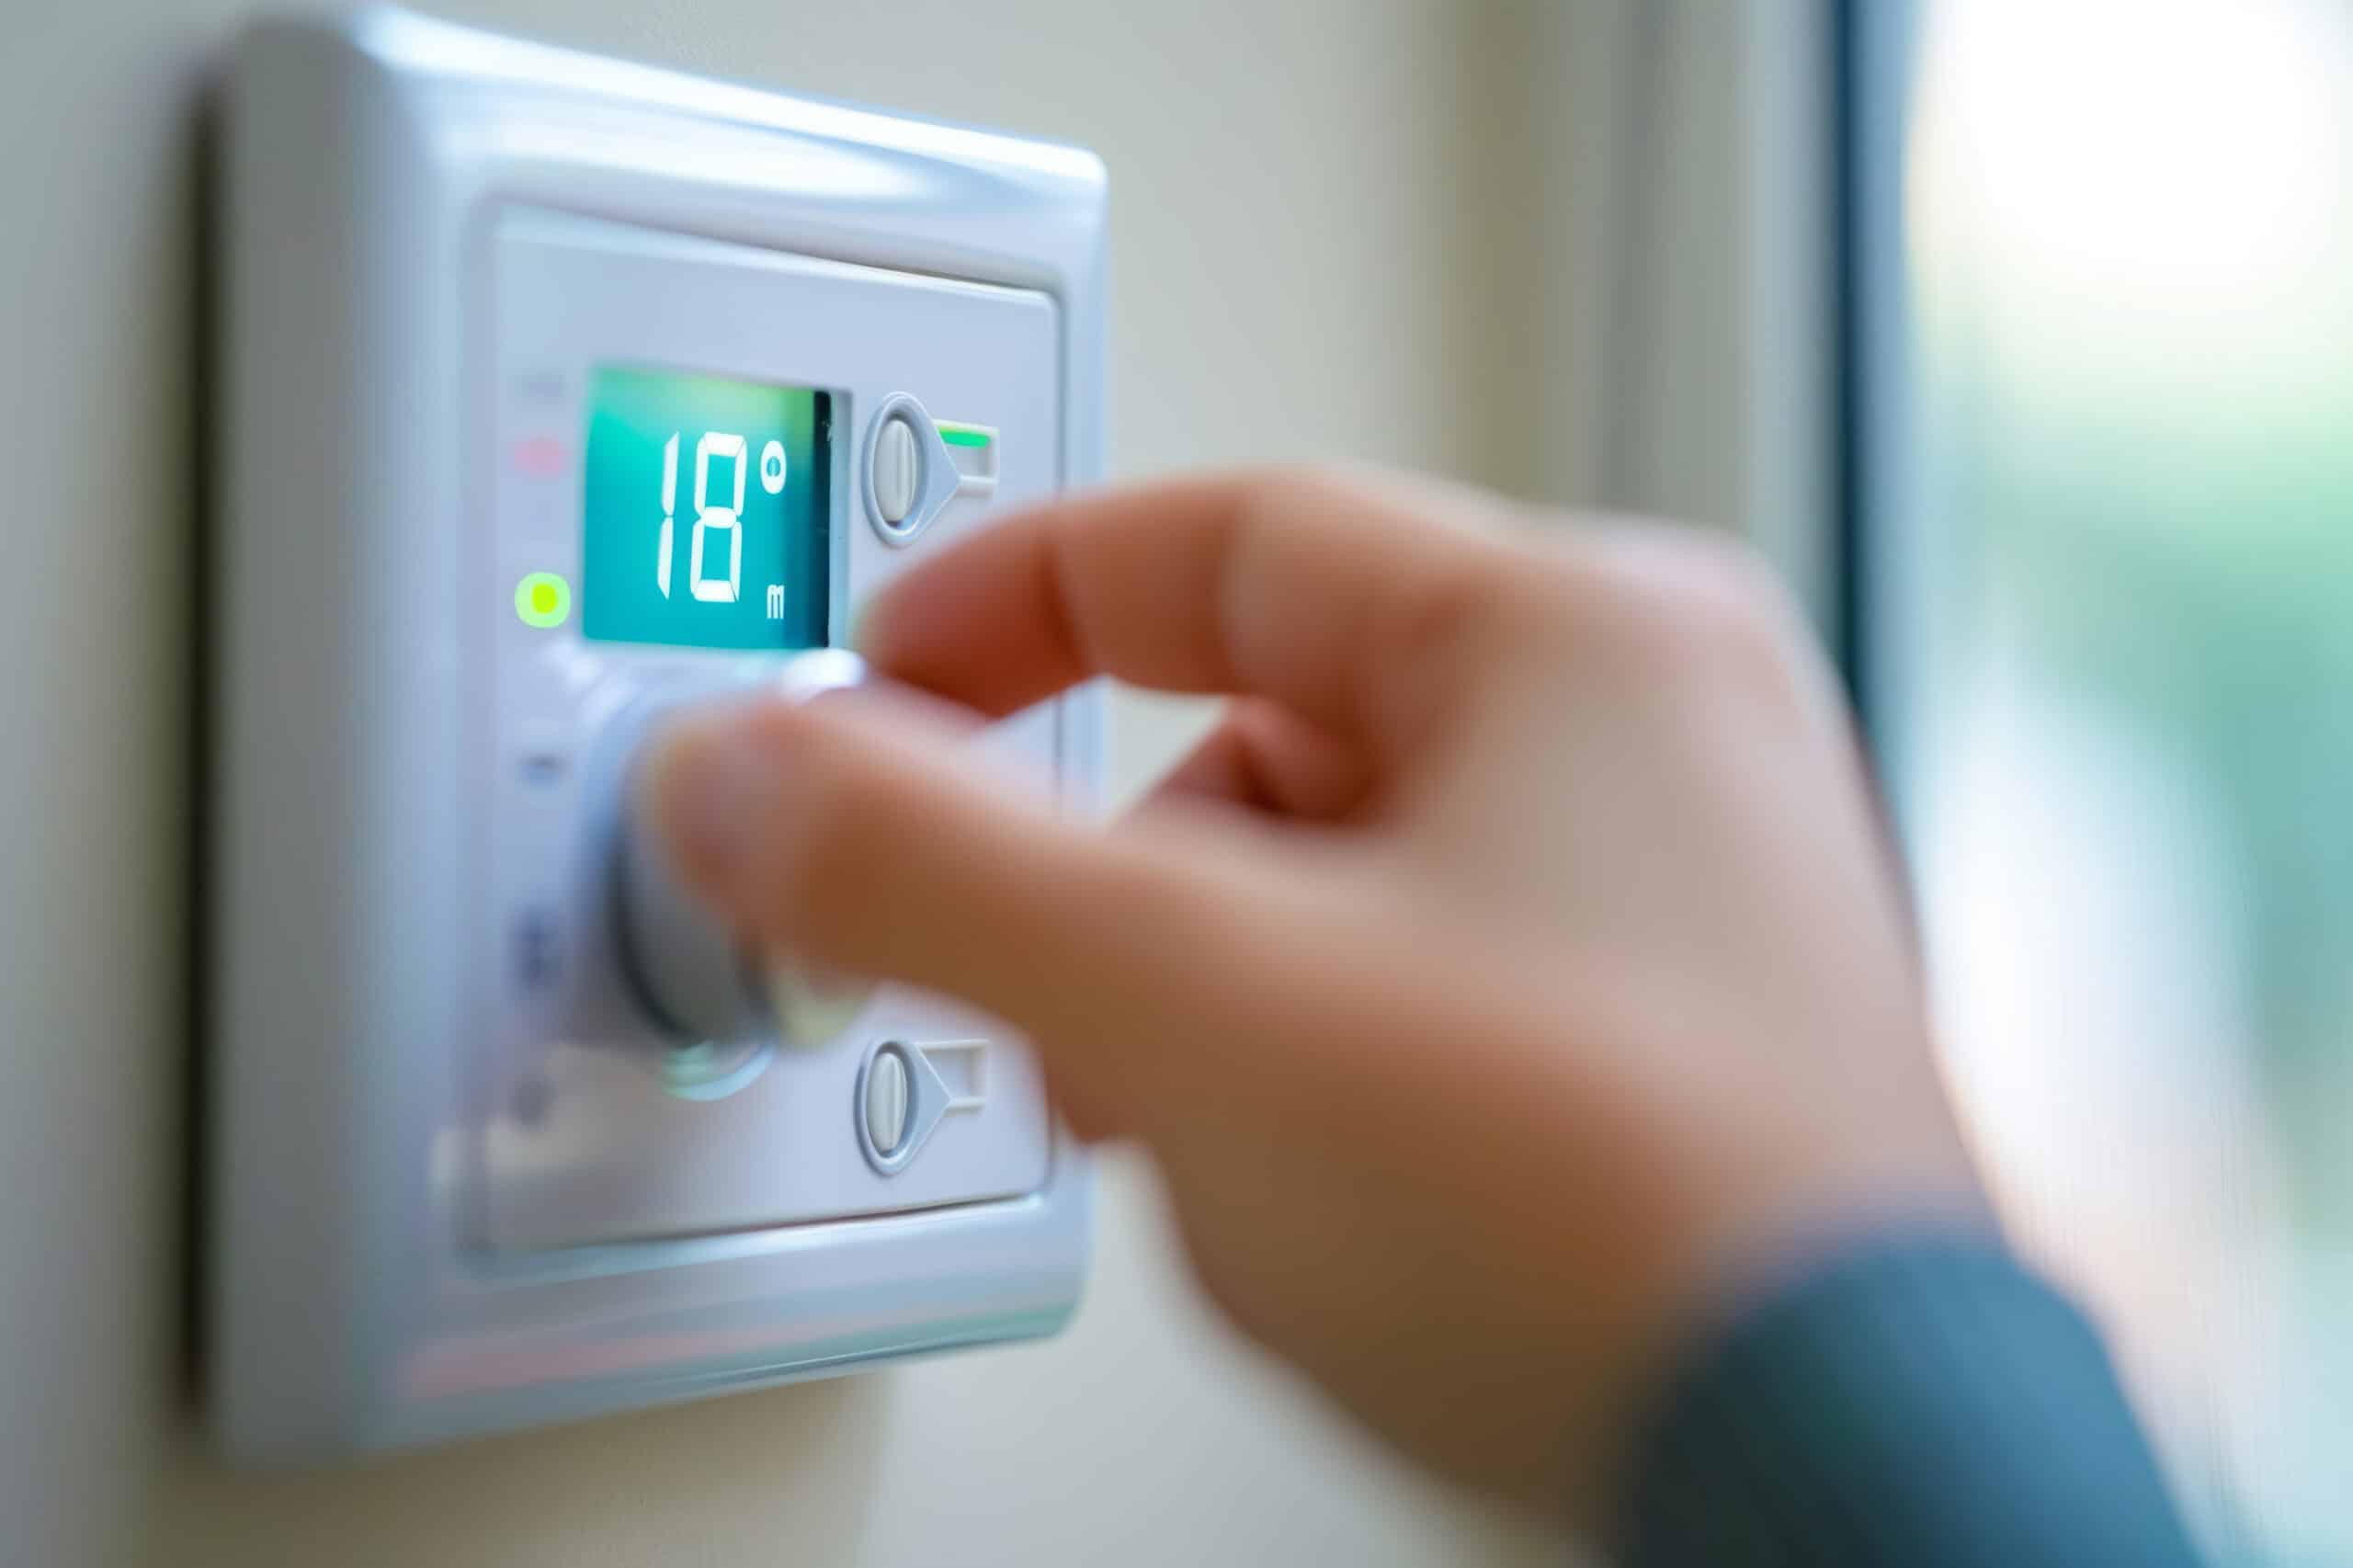 www.appr.com : What causes carbon monoxide generation in homes?